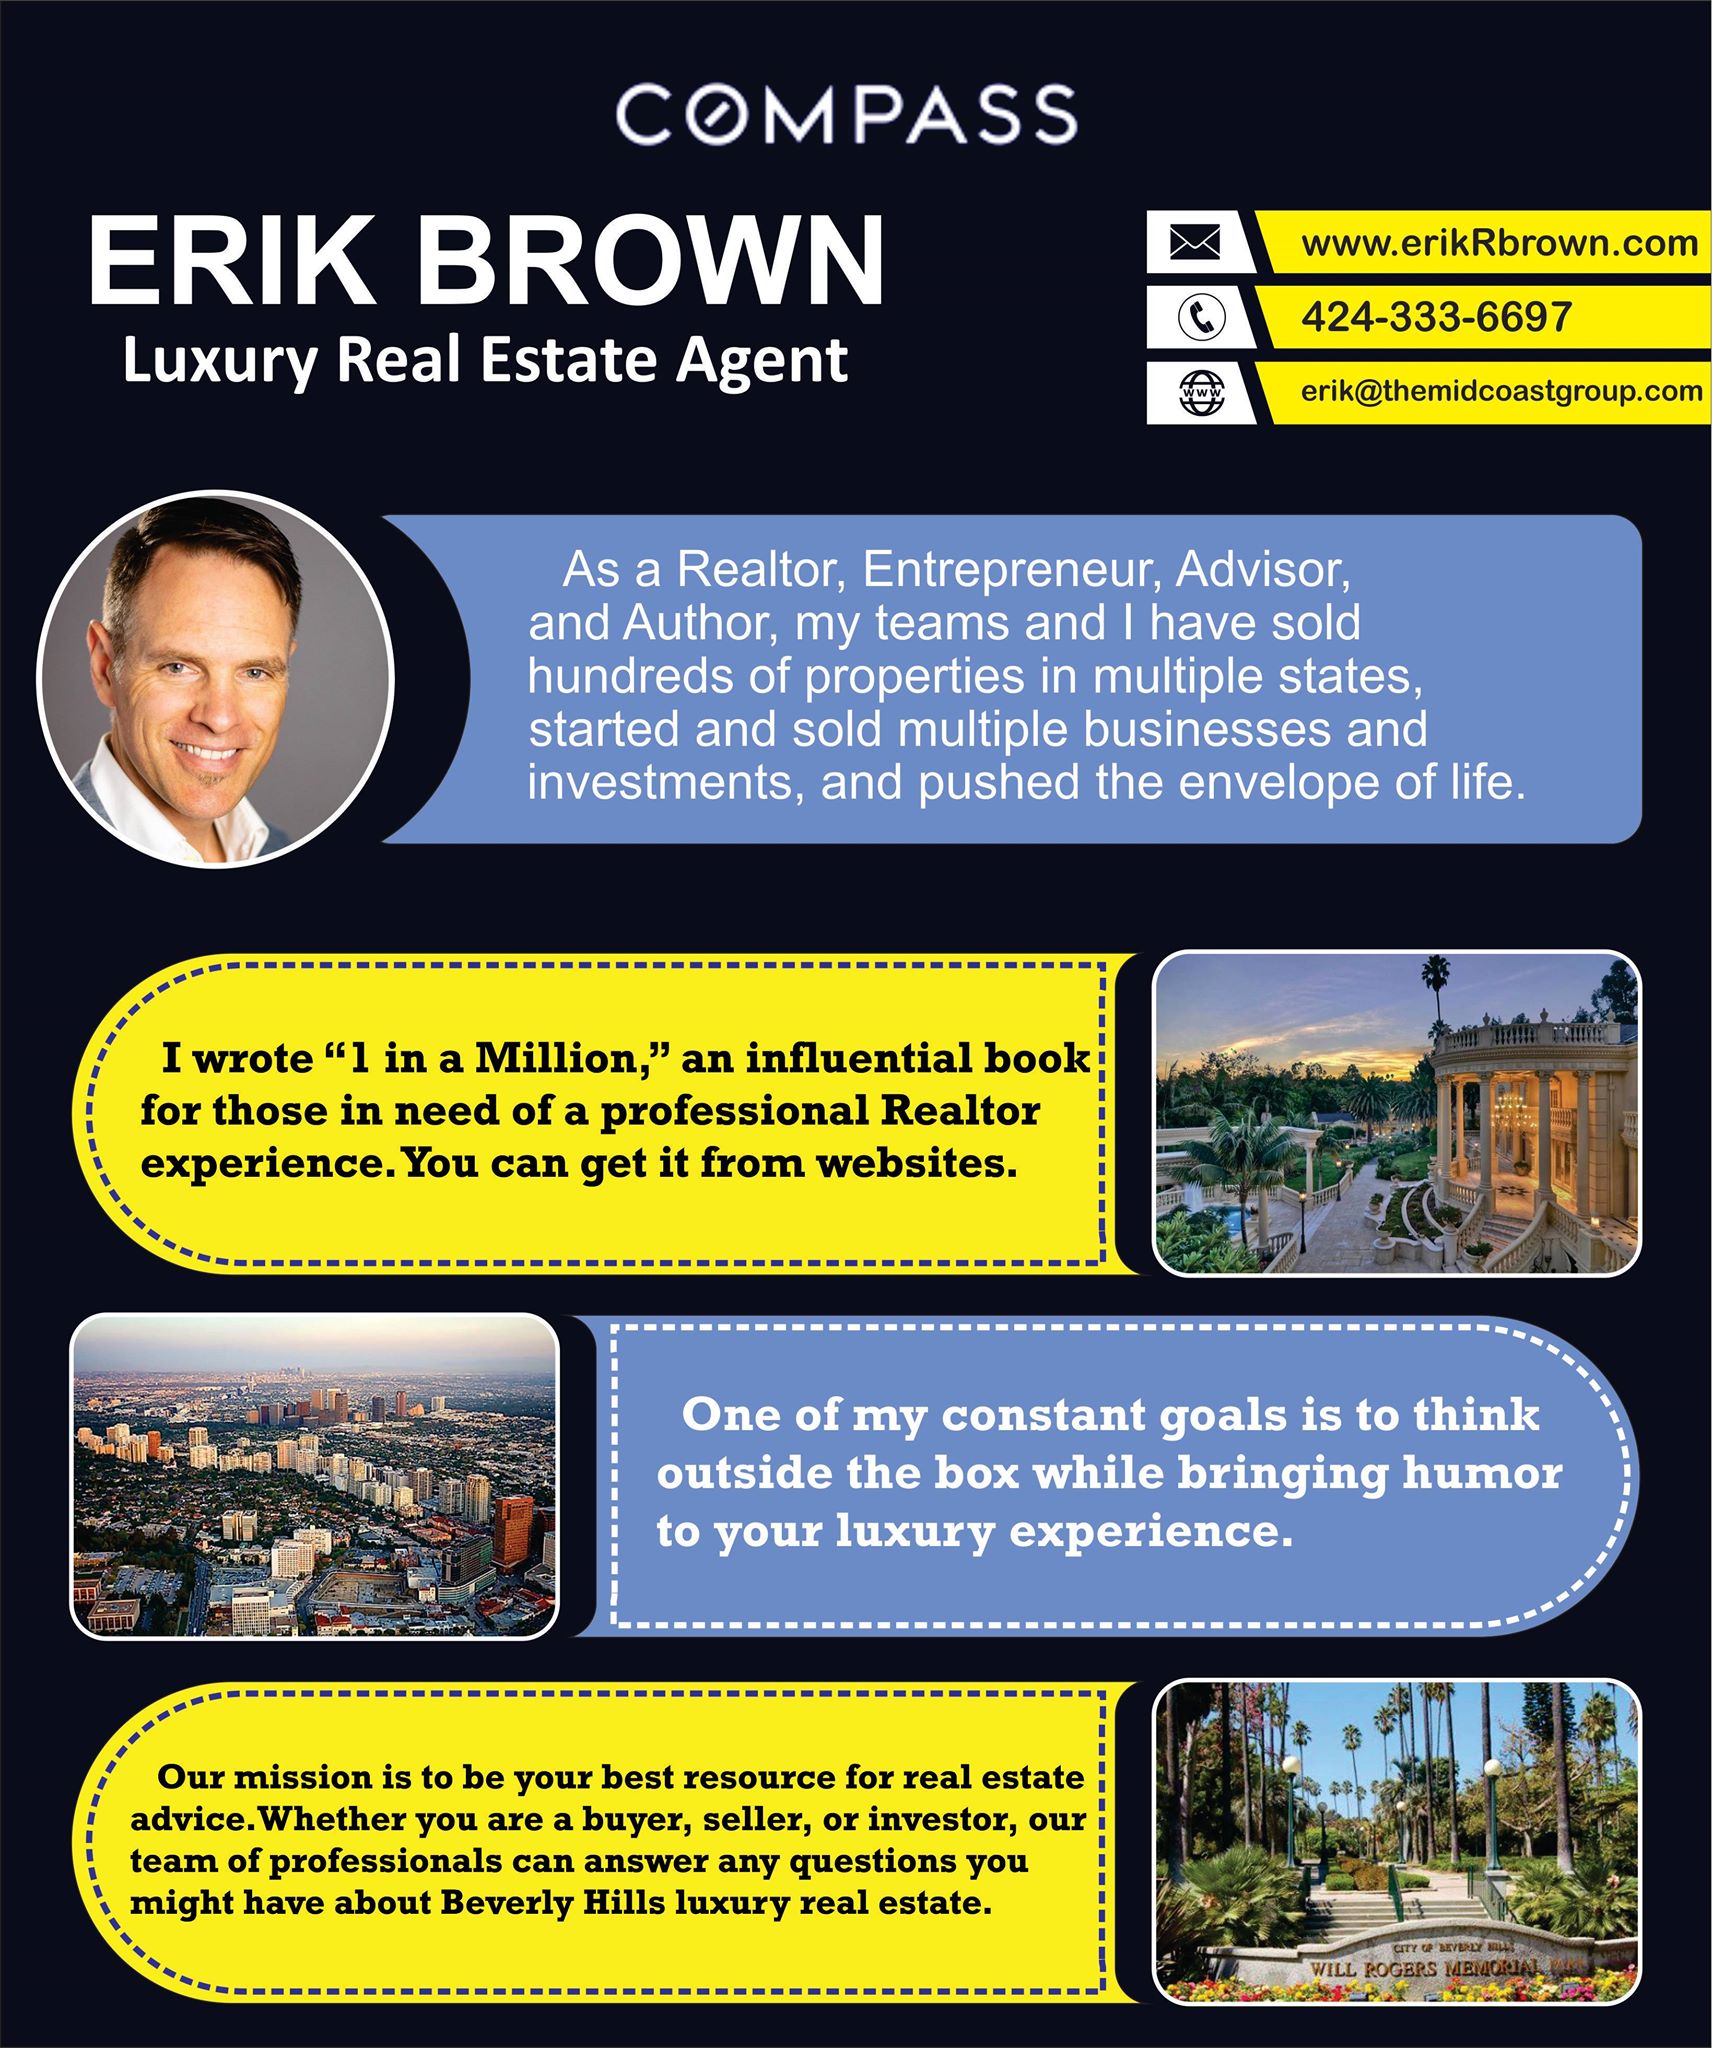 Erik Brown - Real Estate Agent in Beverly Hills, CA